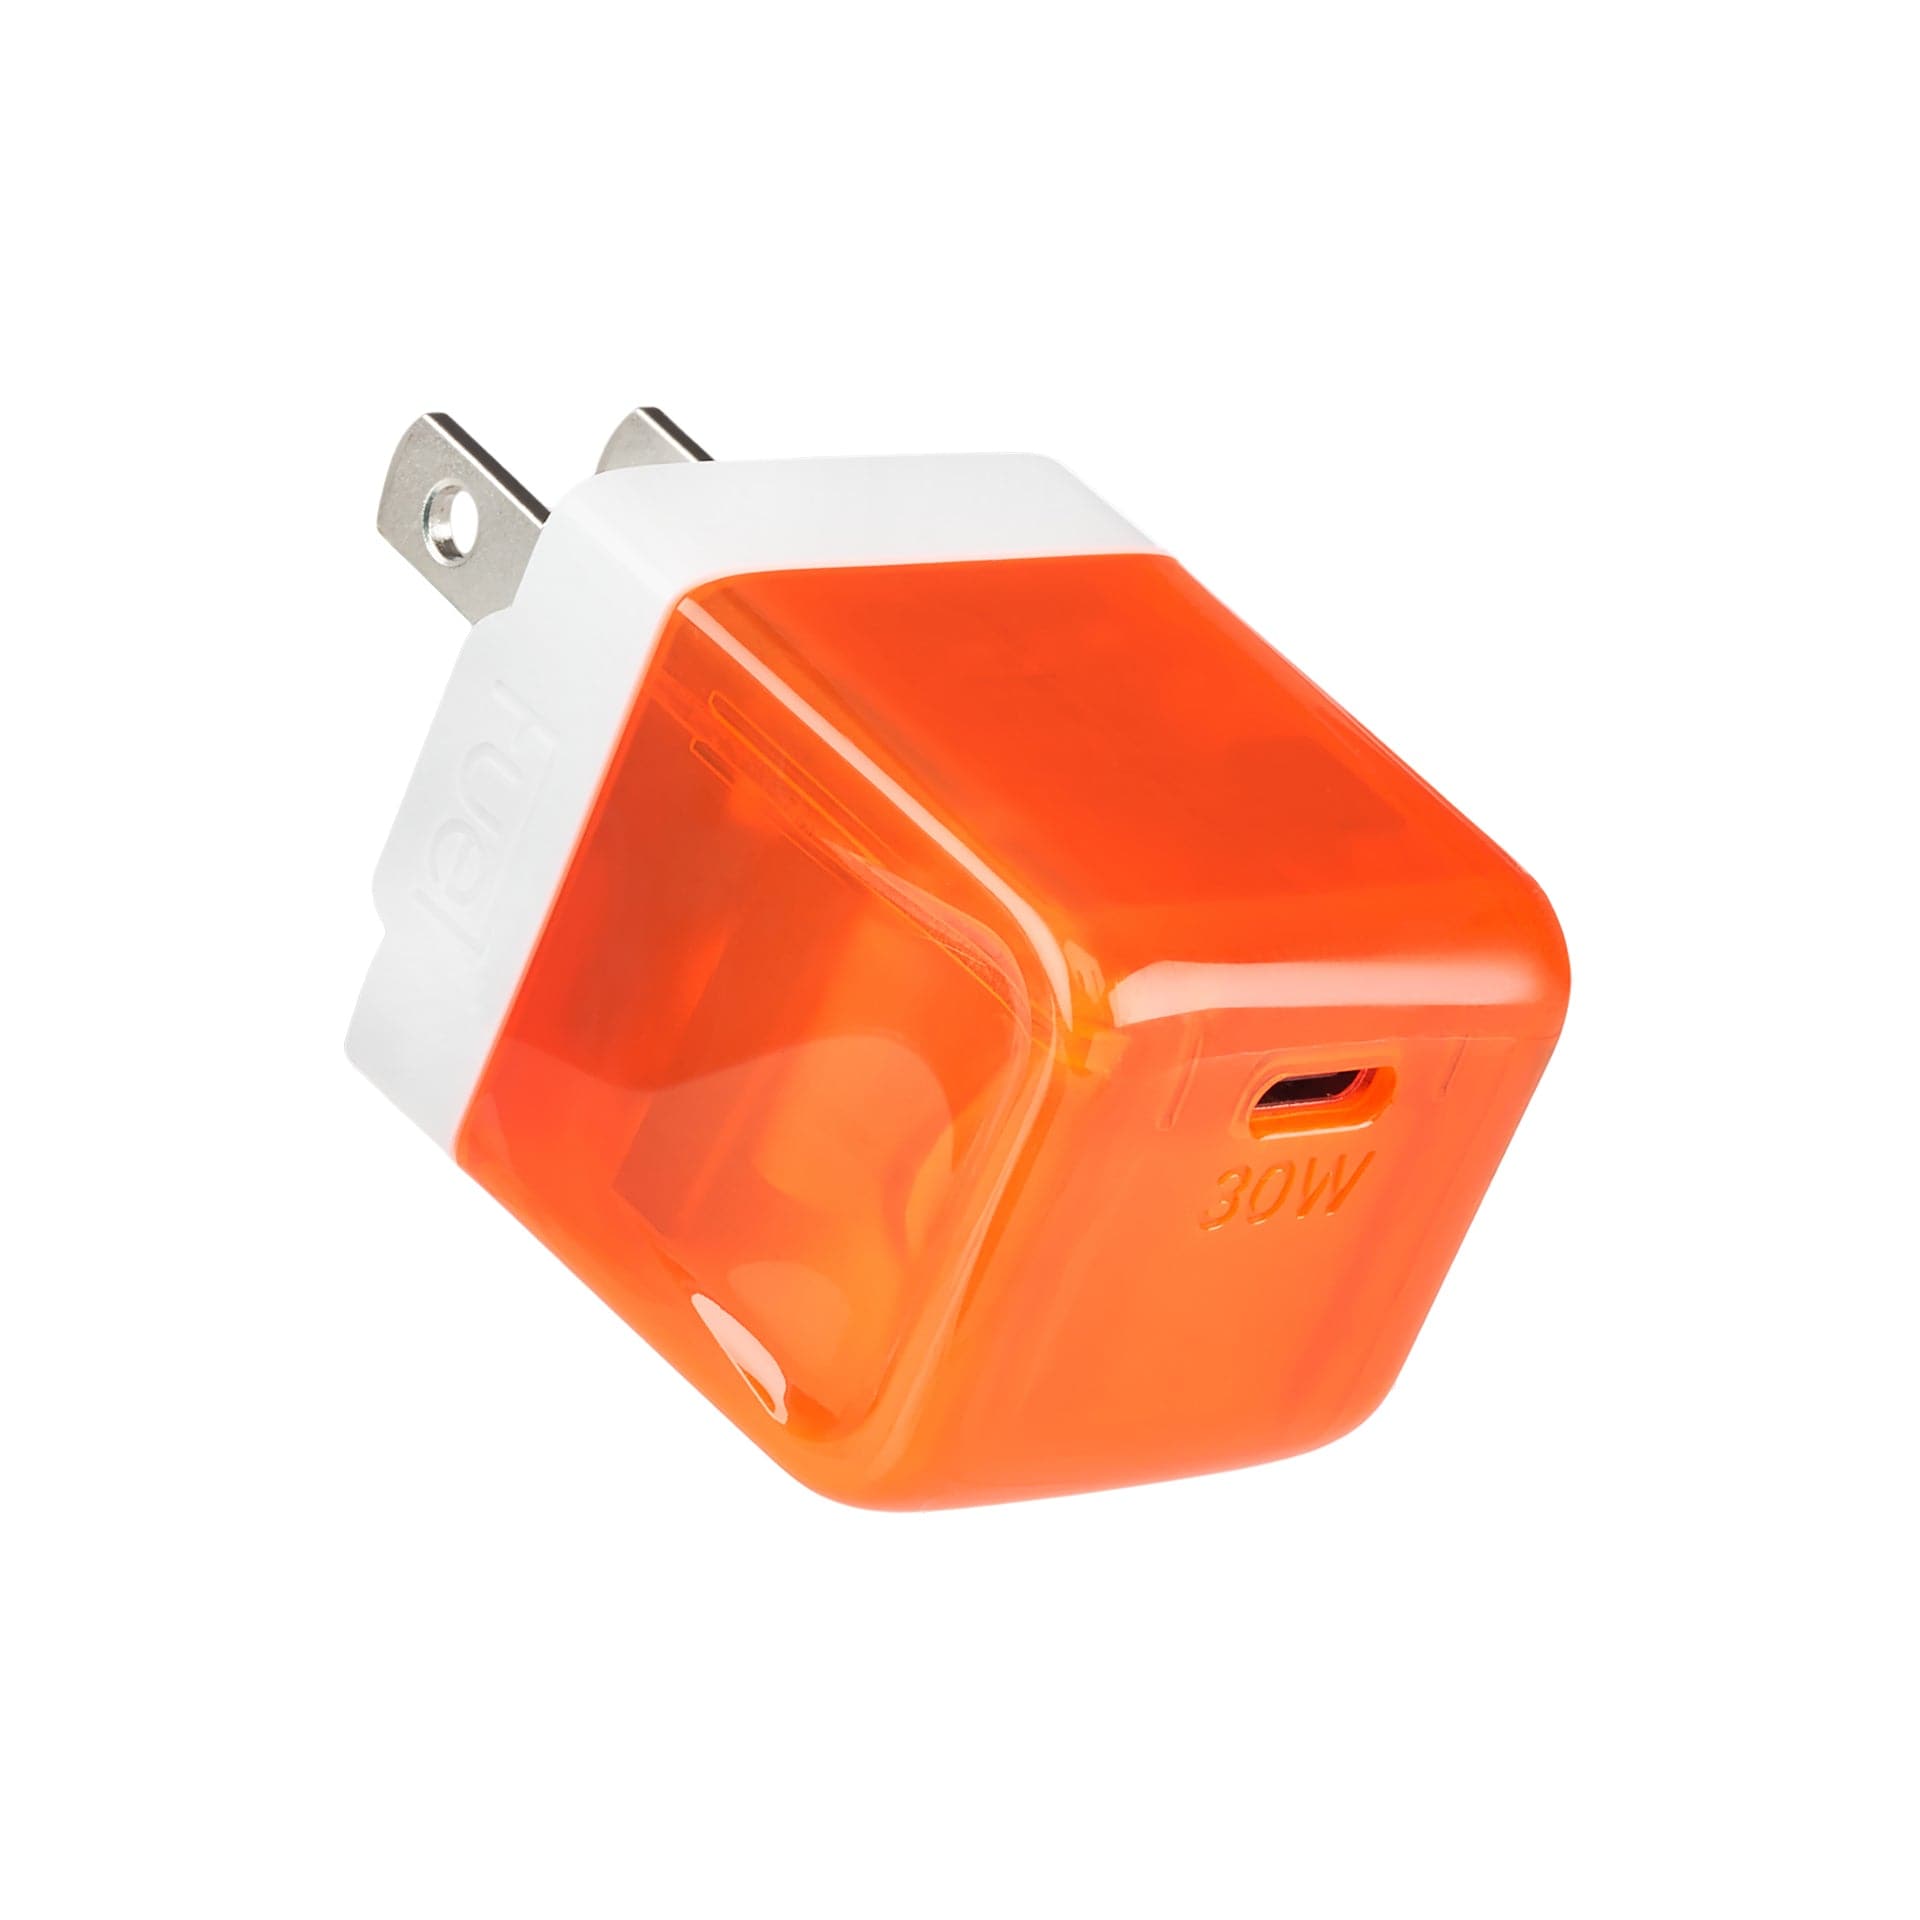 FUEL 30W USB-C Wall Charger color::Vibrant Orange